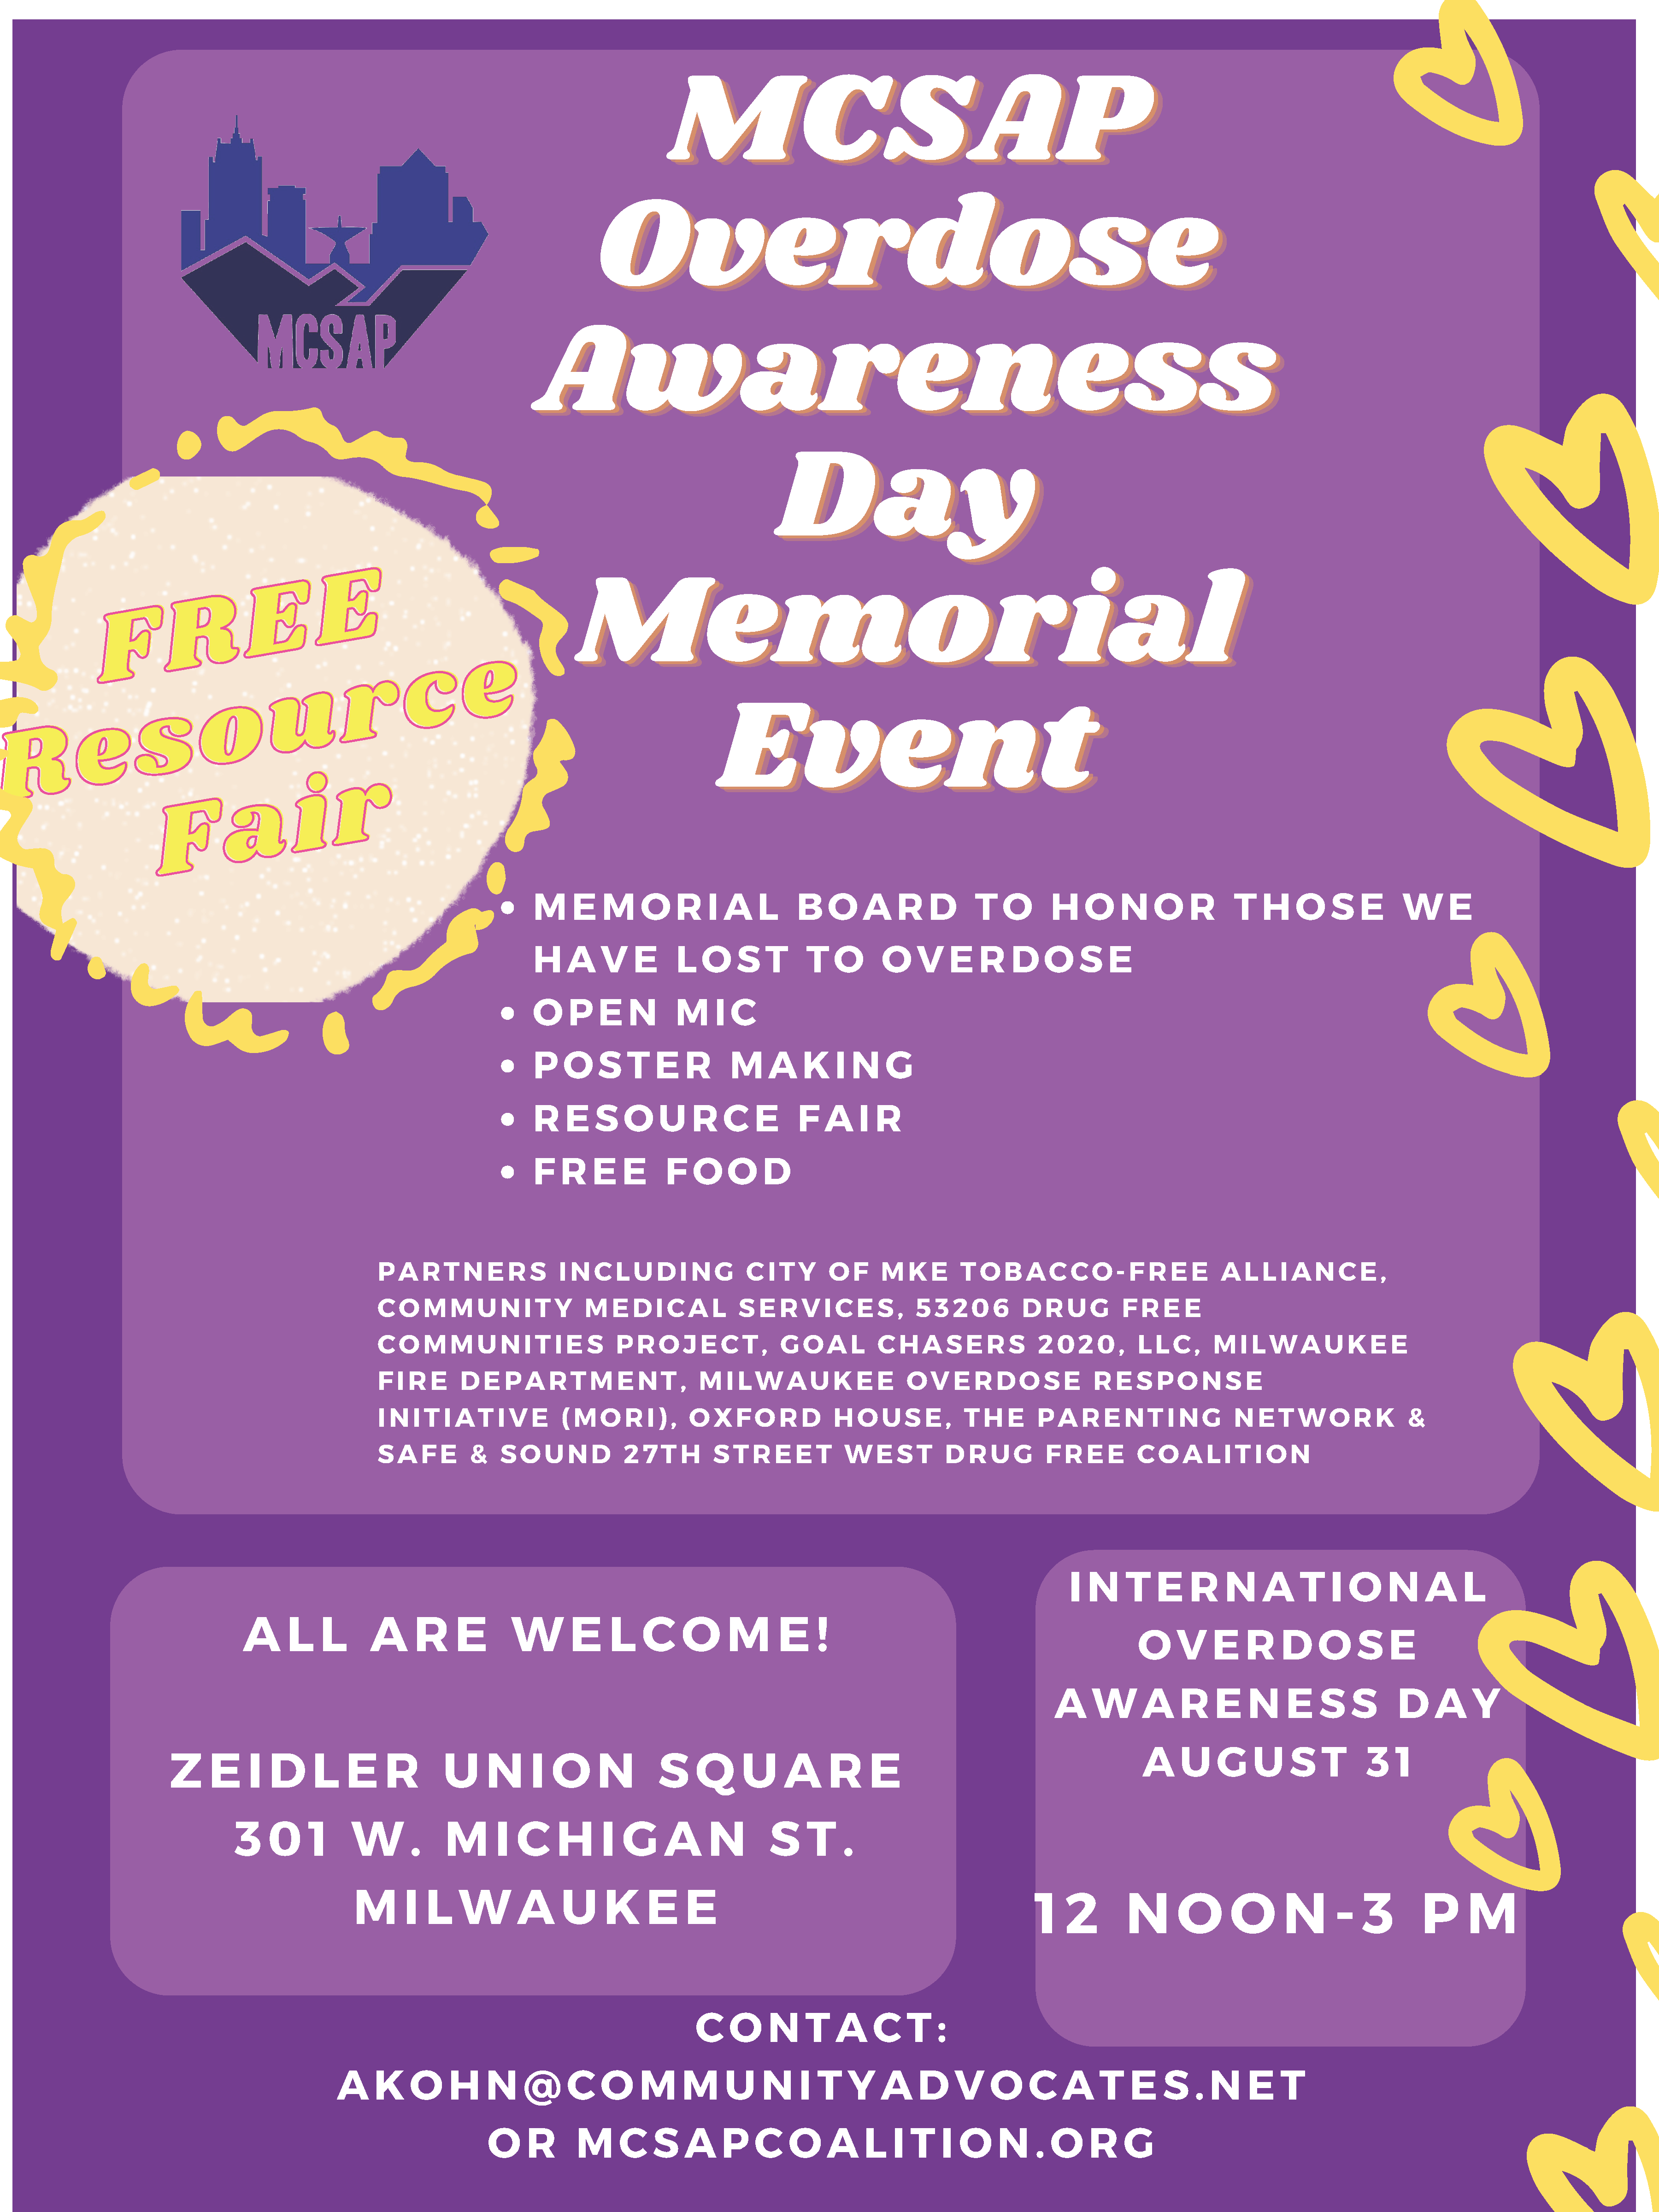 MCSAP overdose awareness day memorial event flyer 